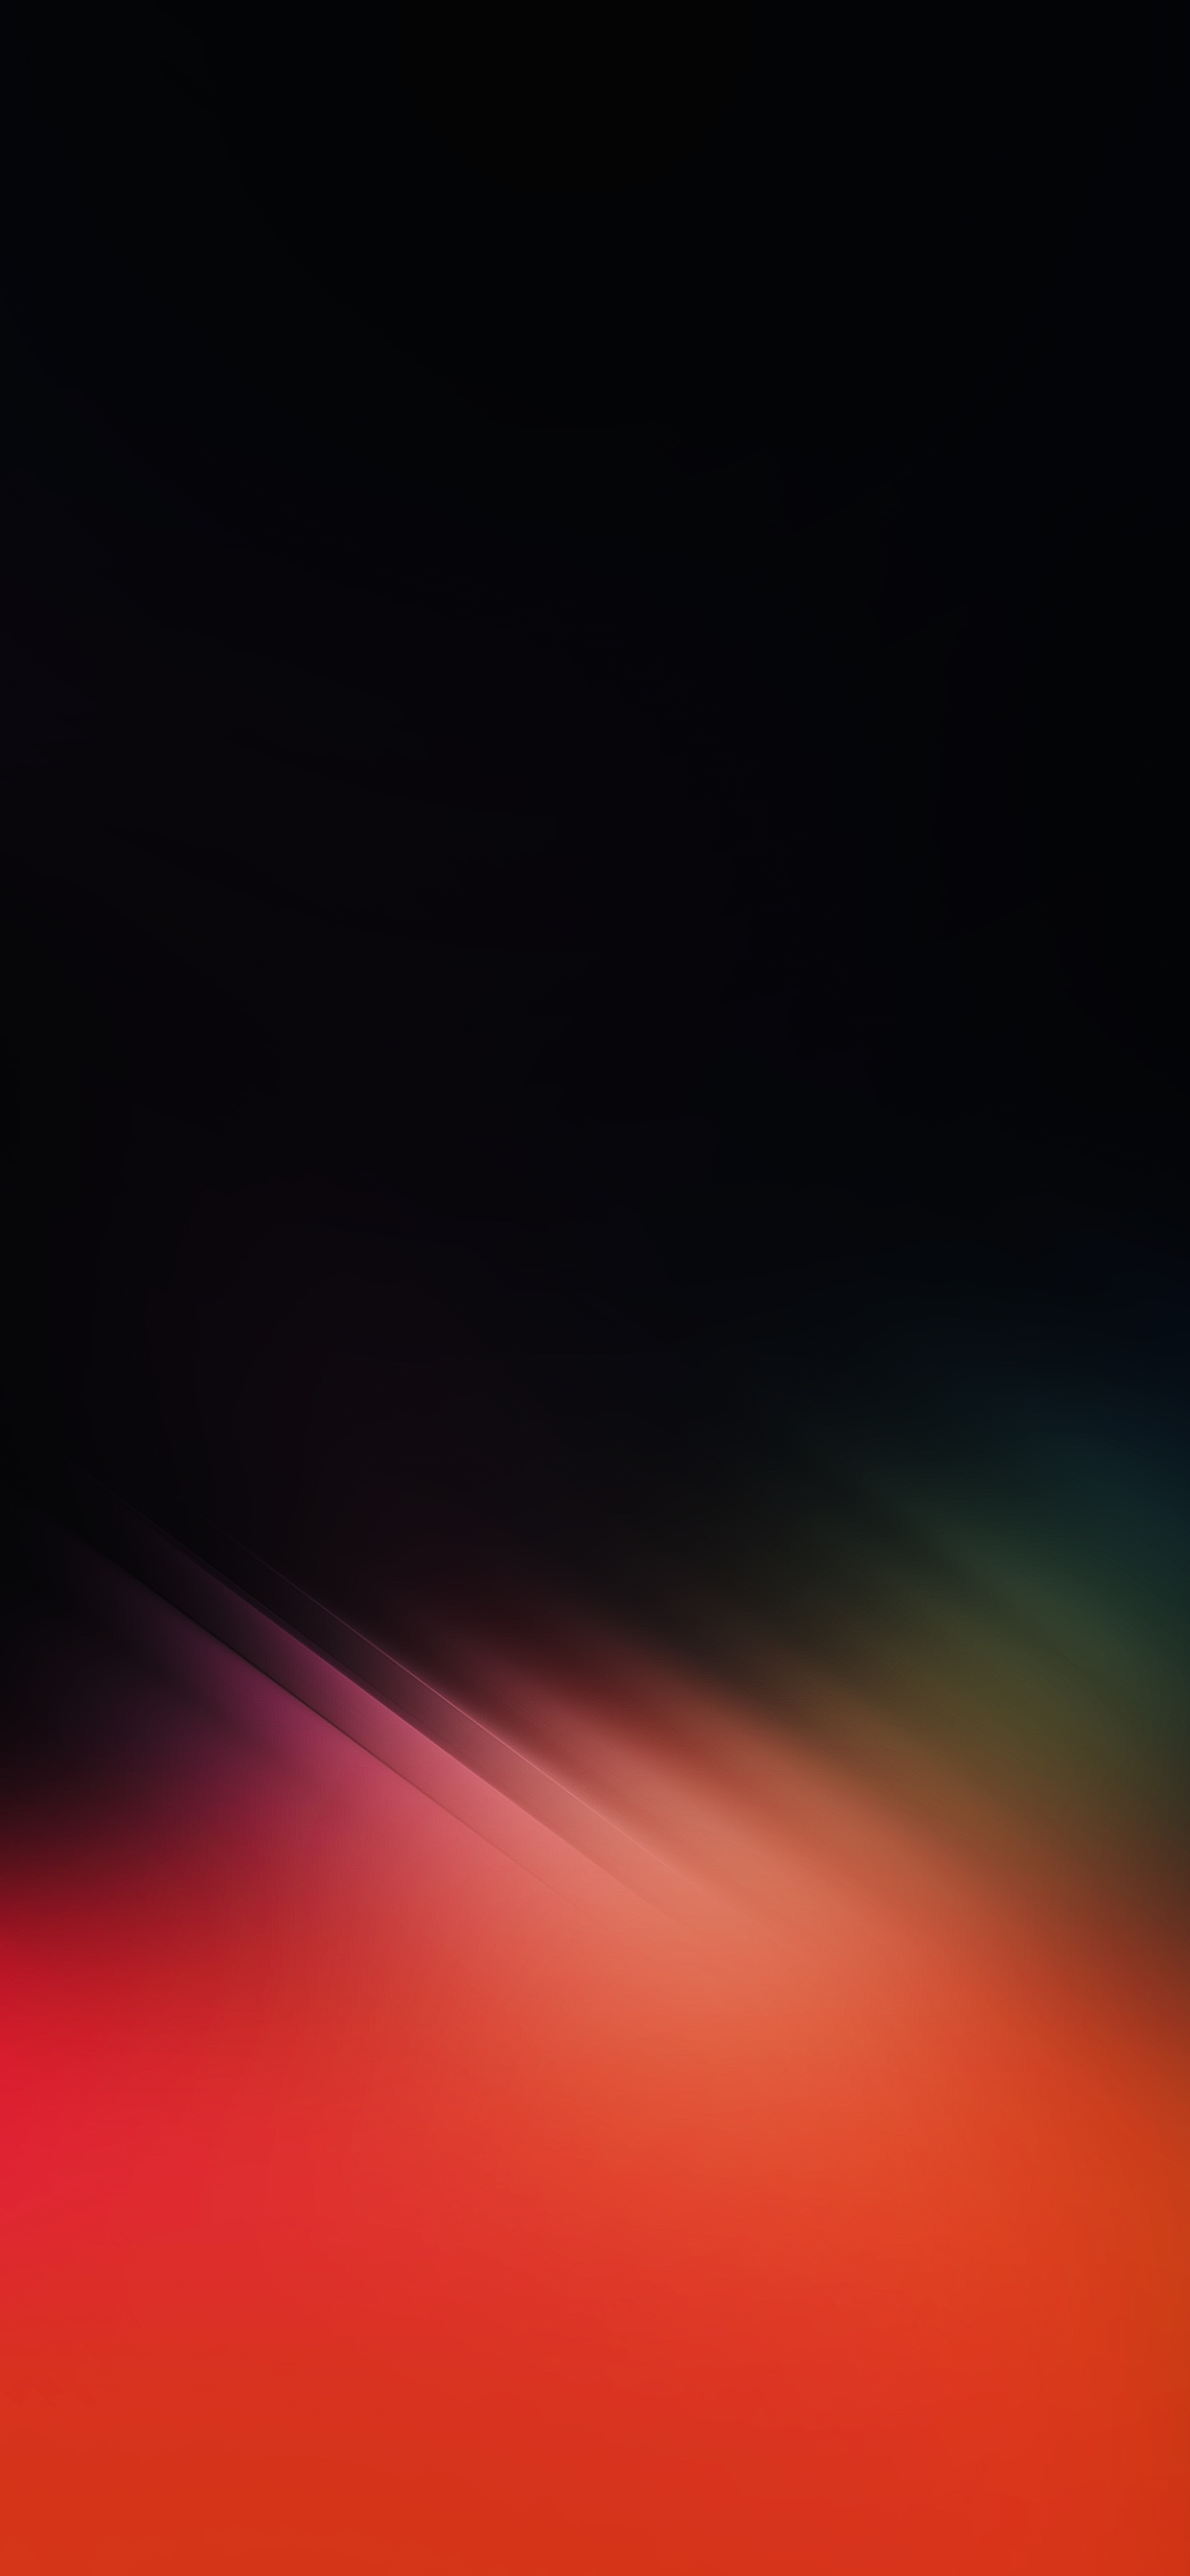 iOS 16  wallpaper  gradient wave by Hk3ToN  Zollotech